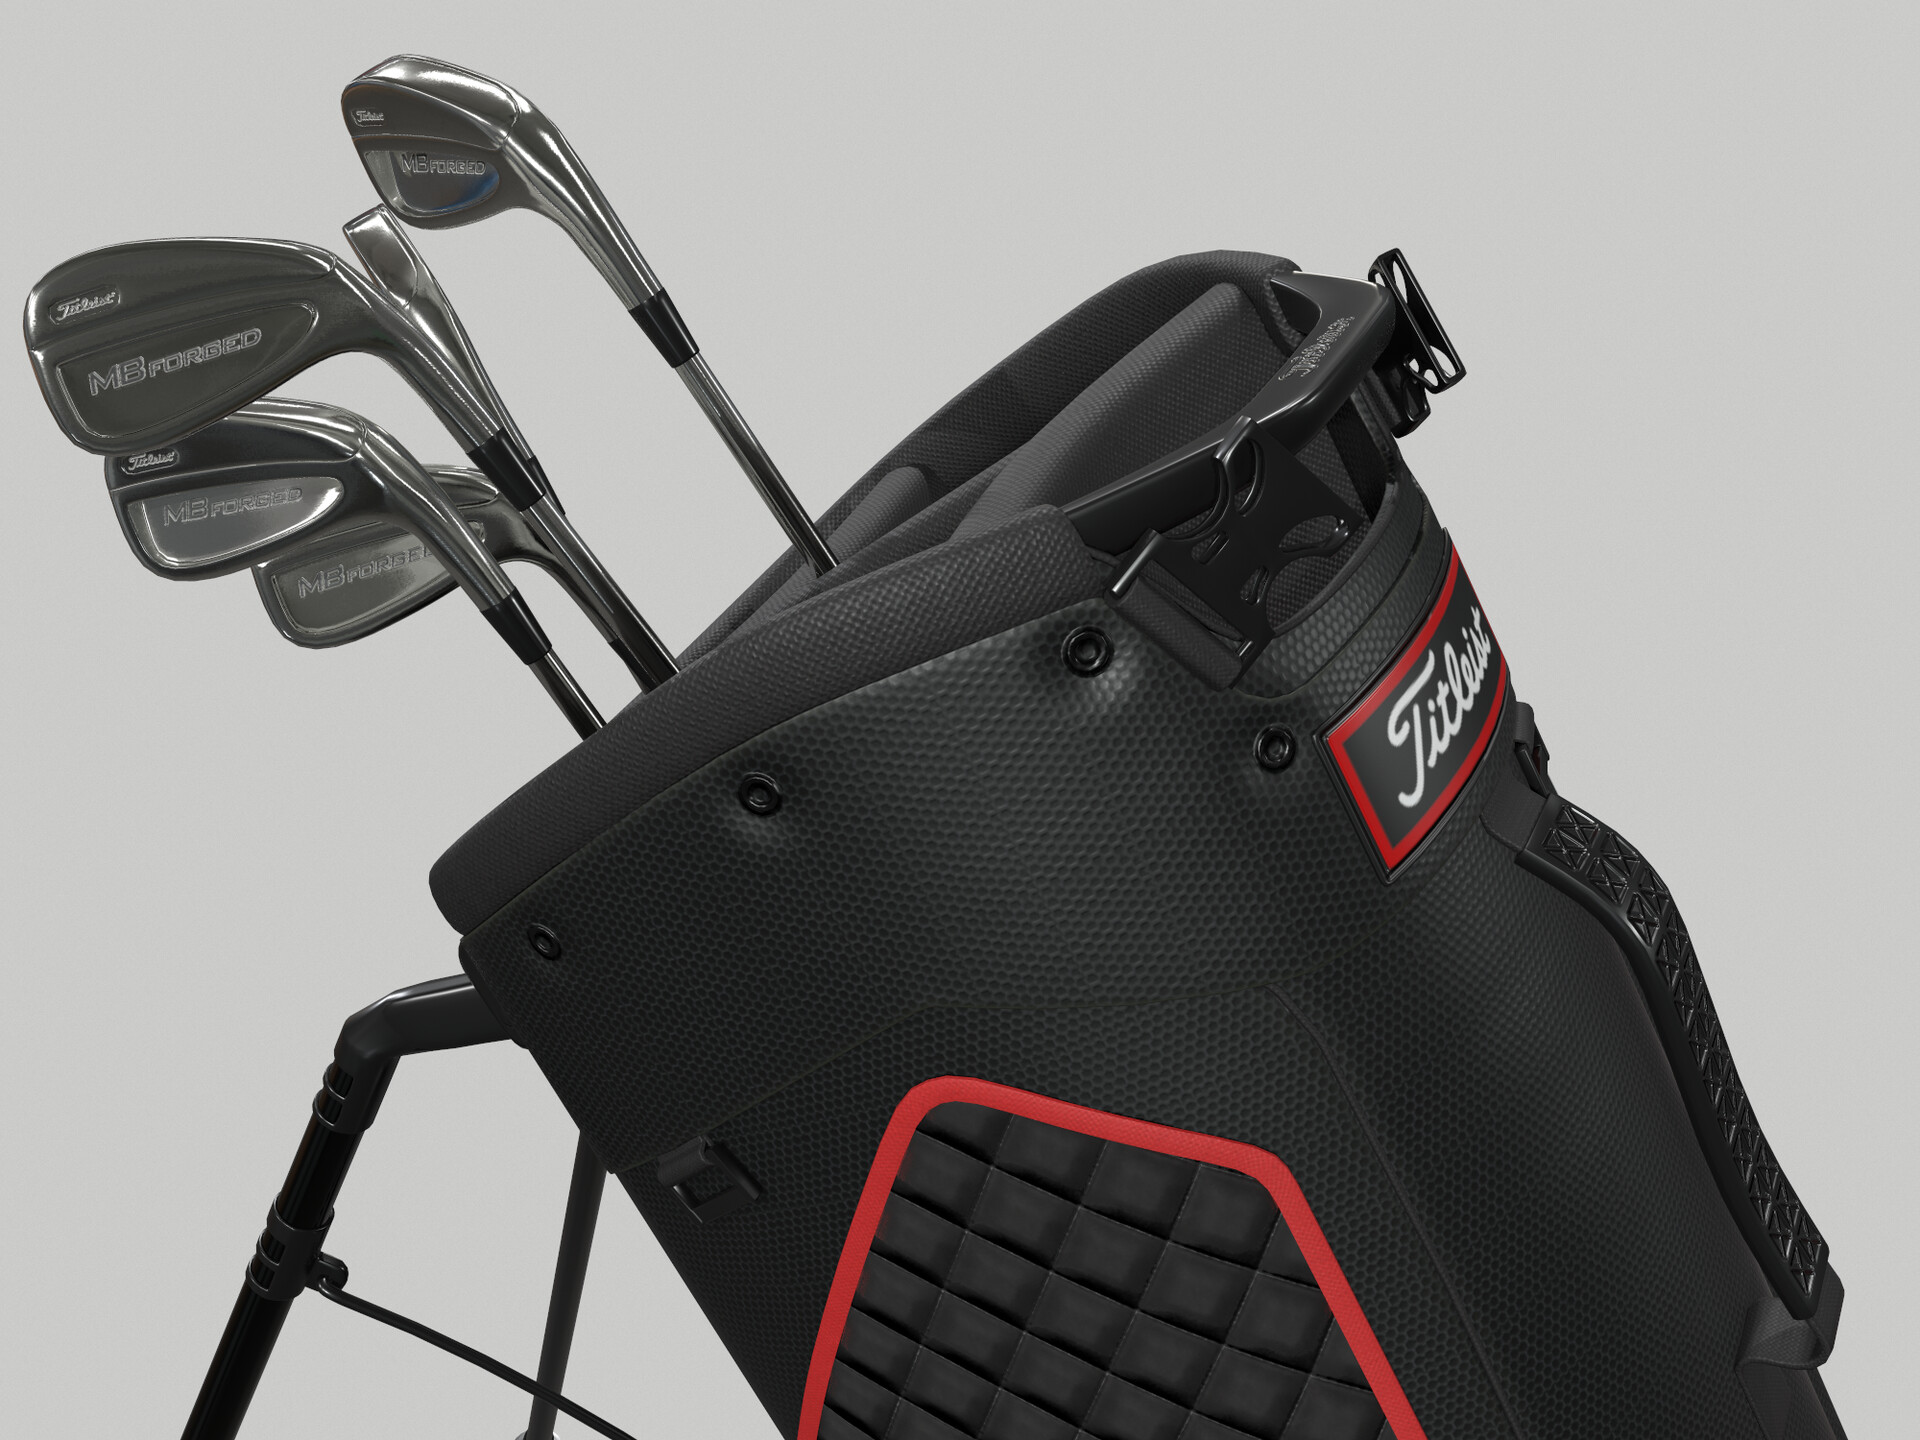 ArtStation - Titleist StaDry Golf Bag Plus